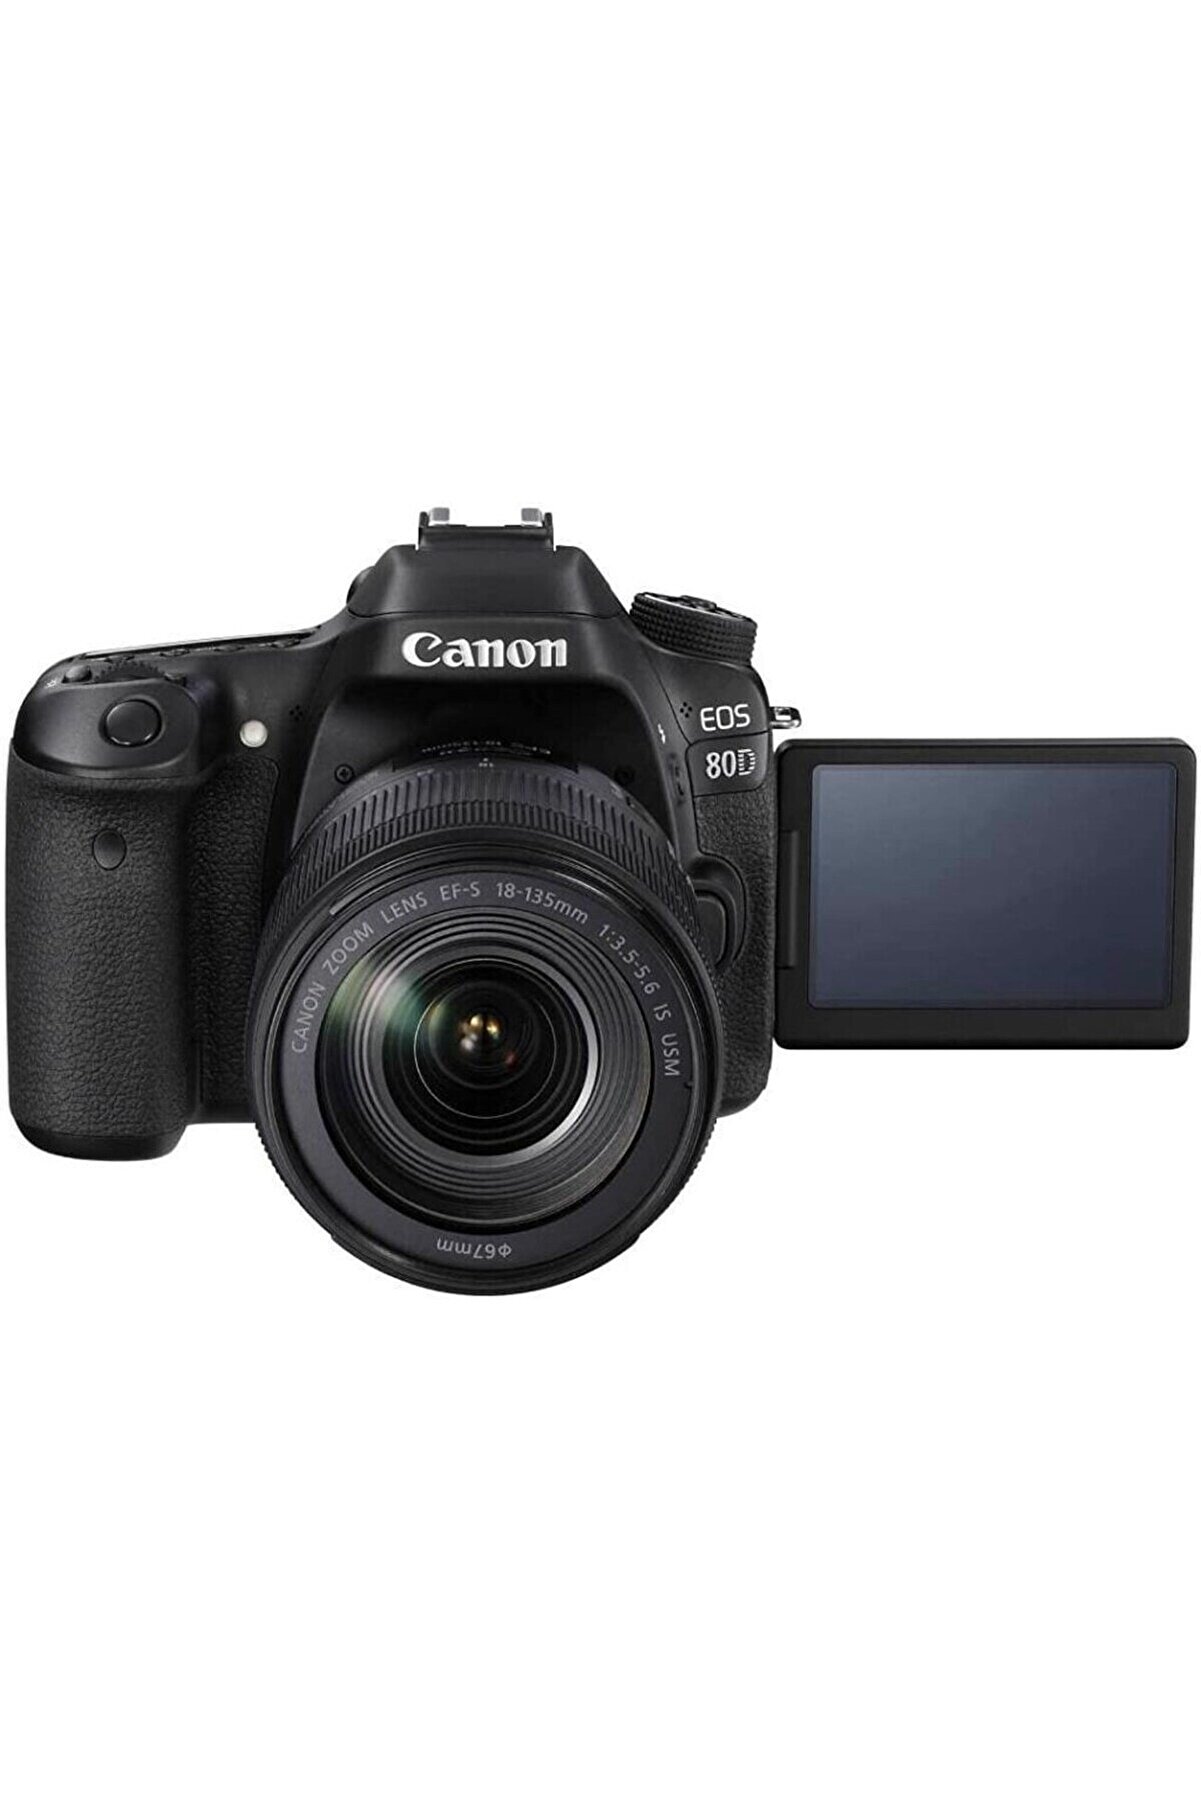 Canon EOS 80D 18-135mm IS USM NANO LENS